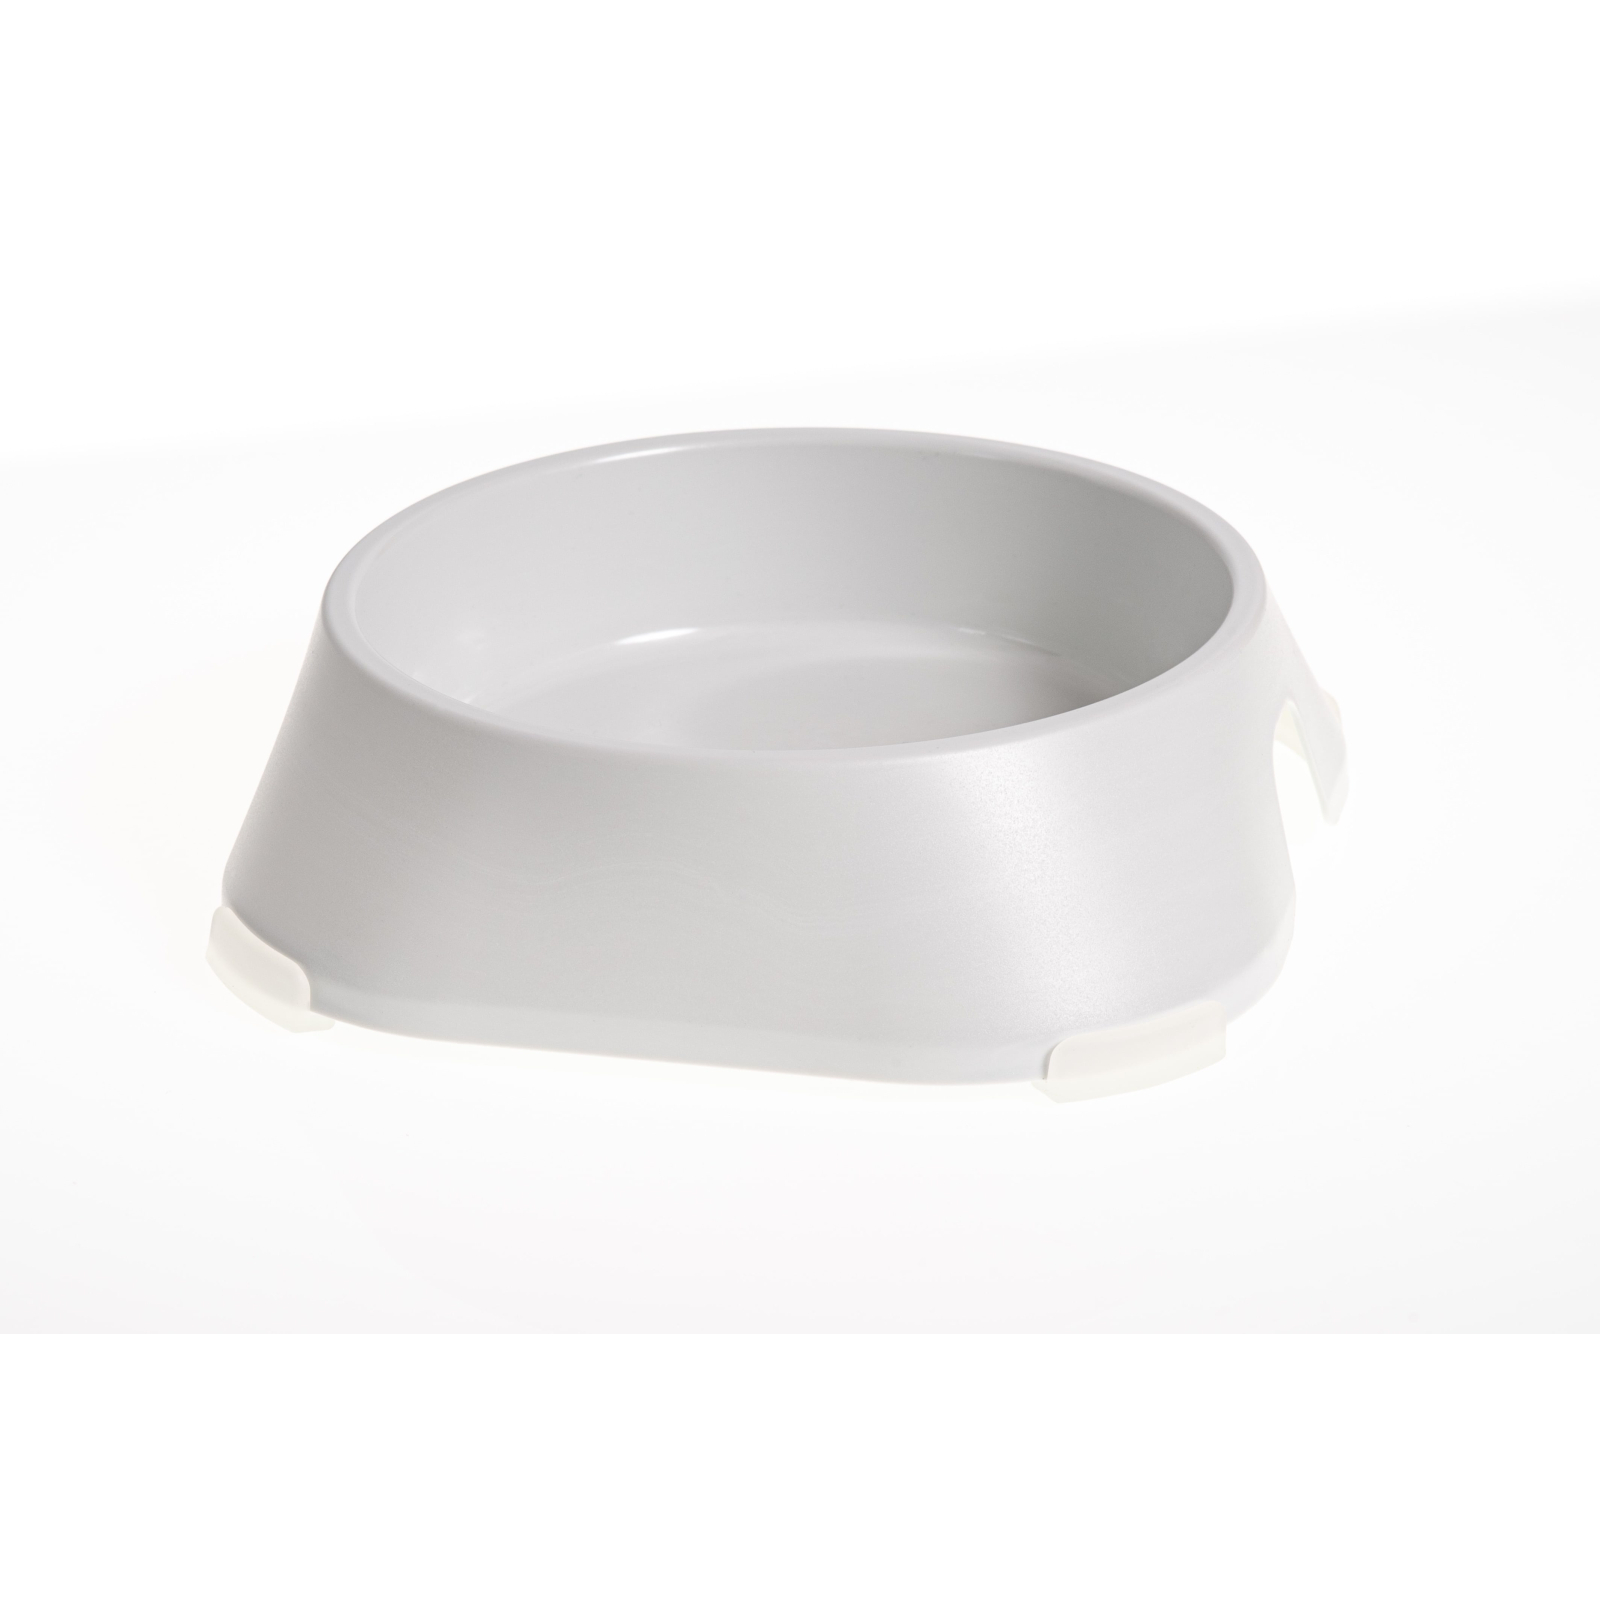 Посуда для собак Fiboo Миска без антискользящих накладок M белая (FIB0153)